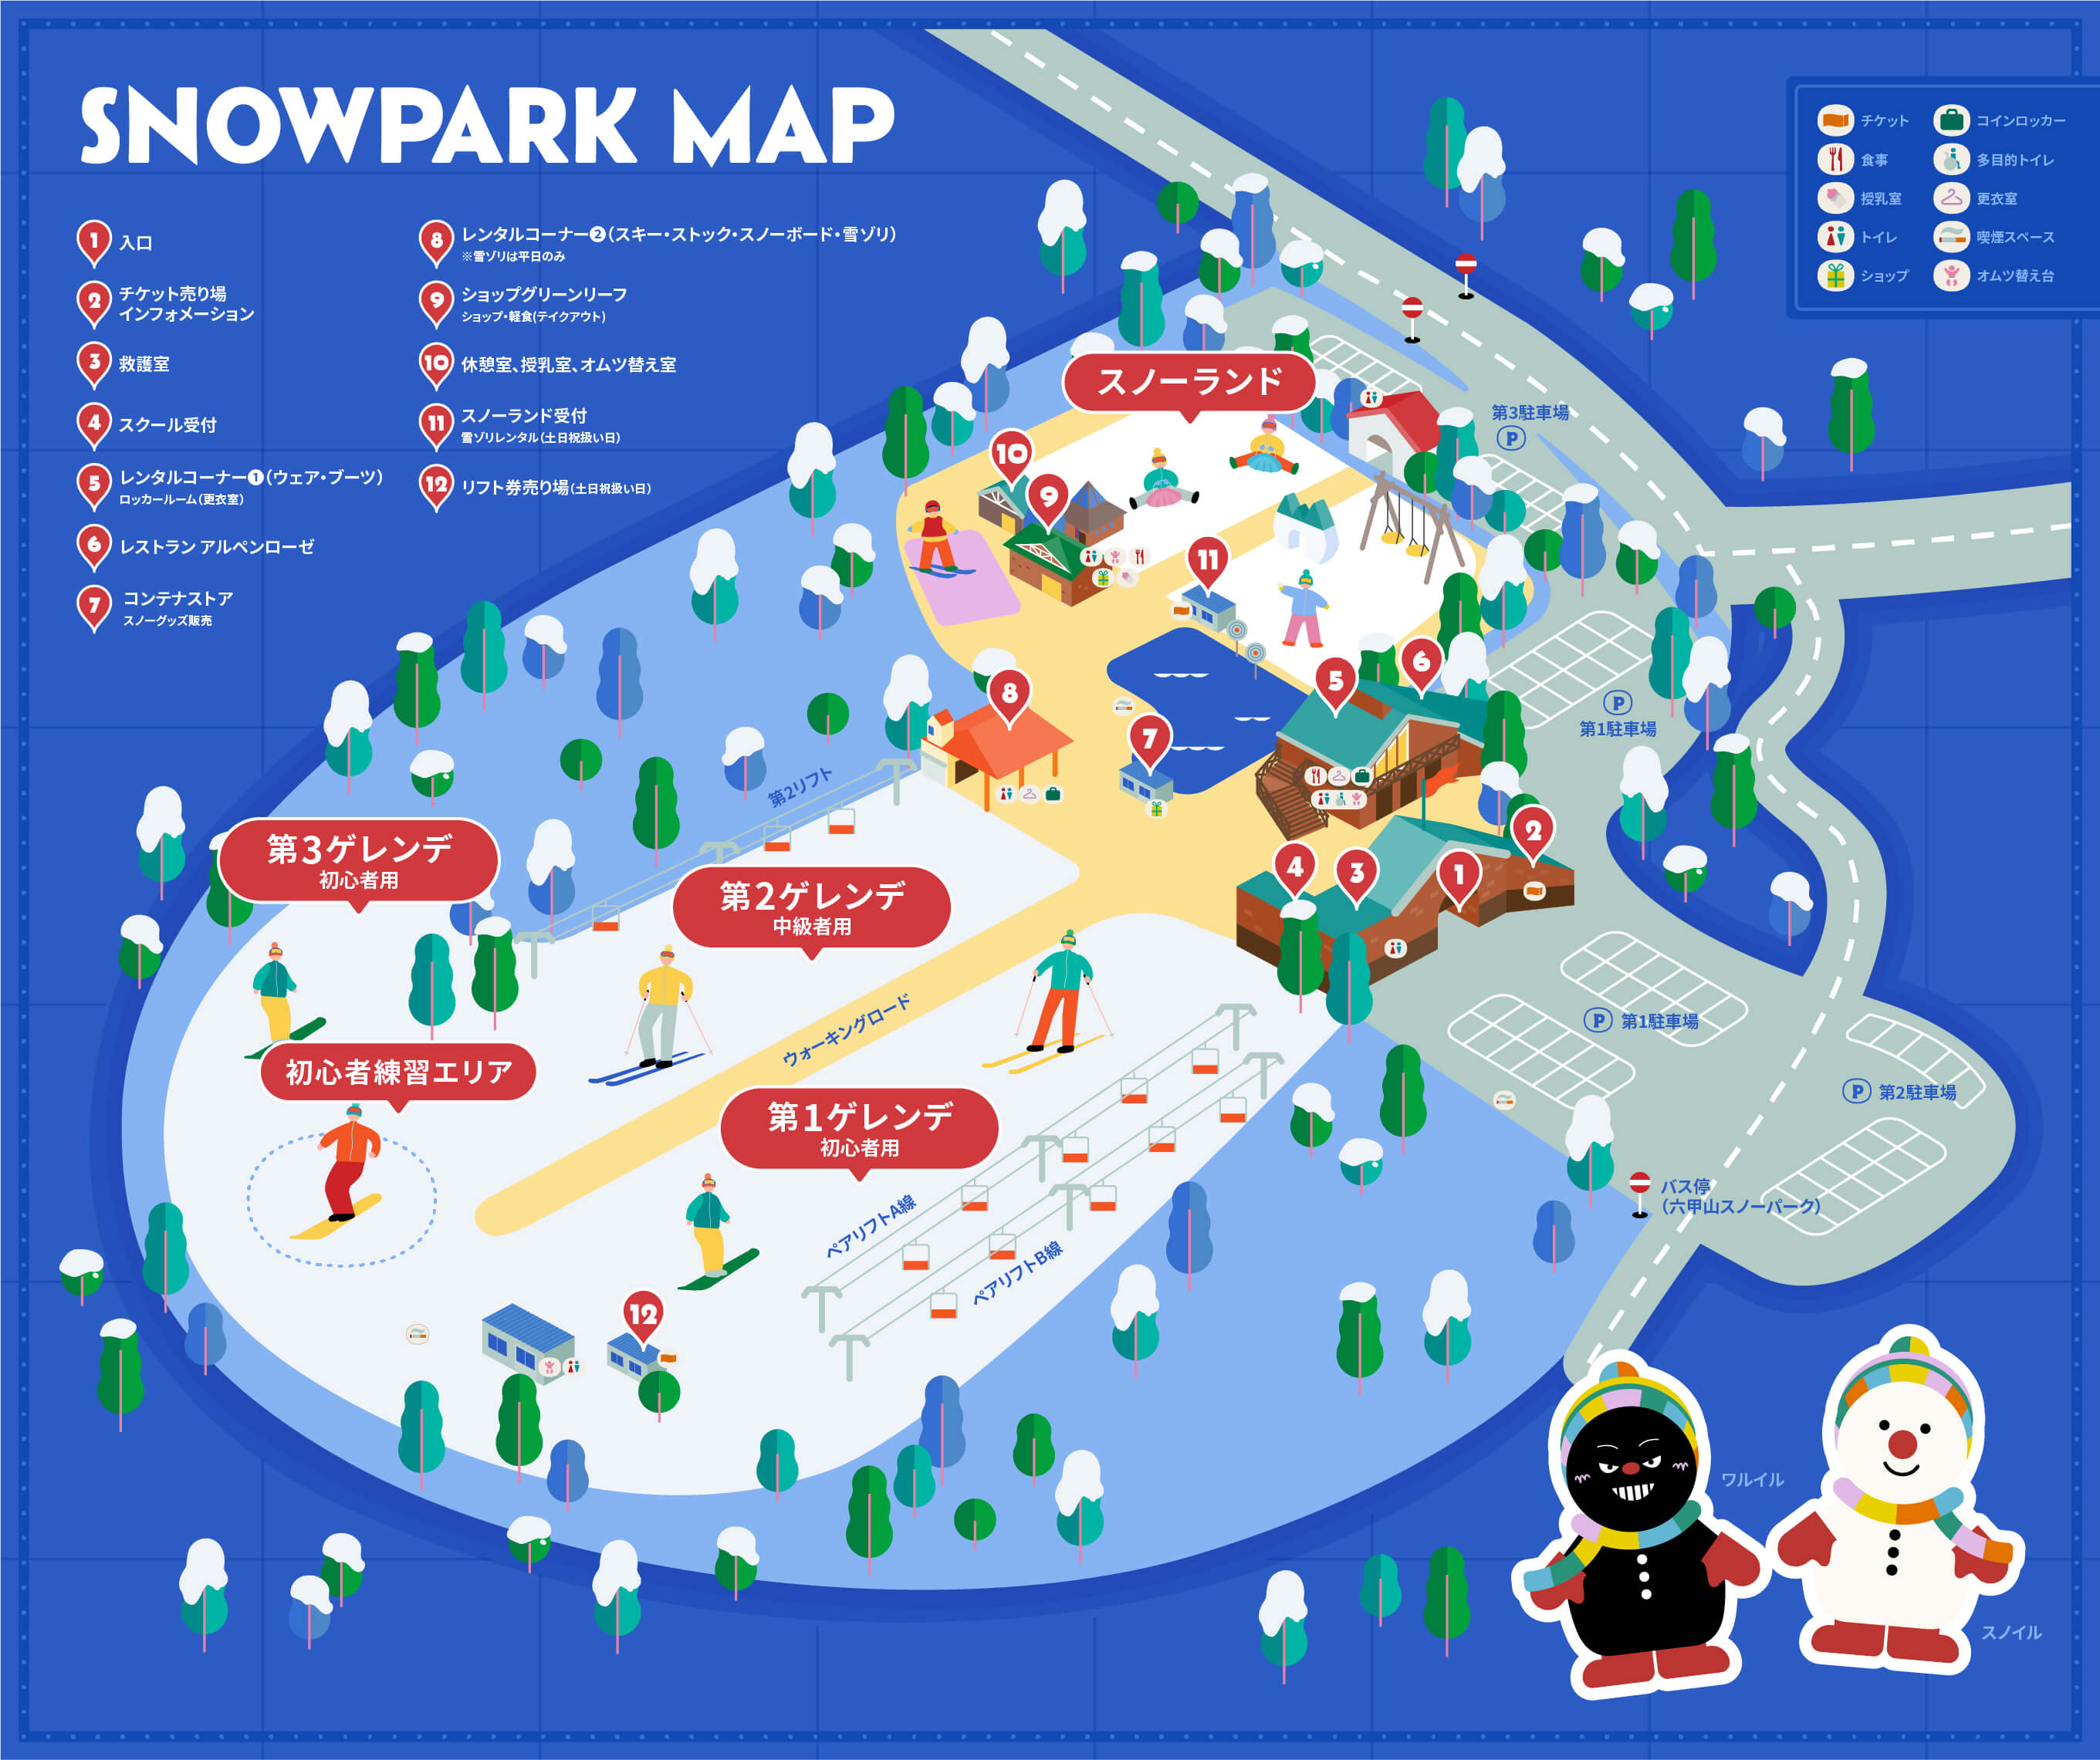 SNOWPARK MAP image